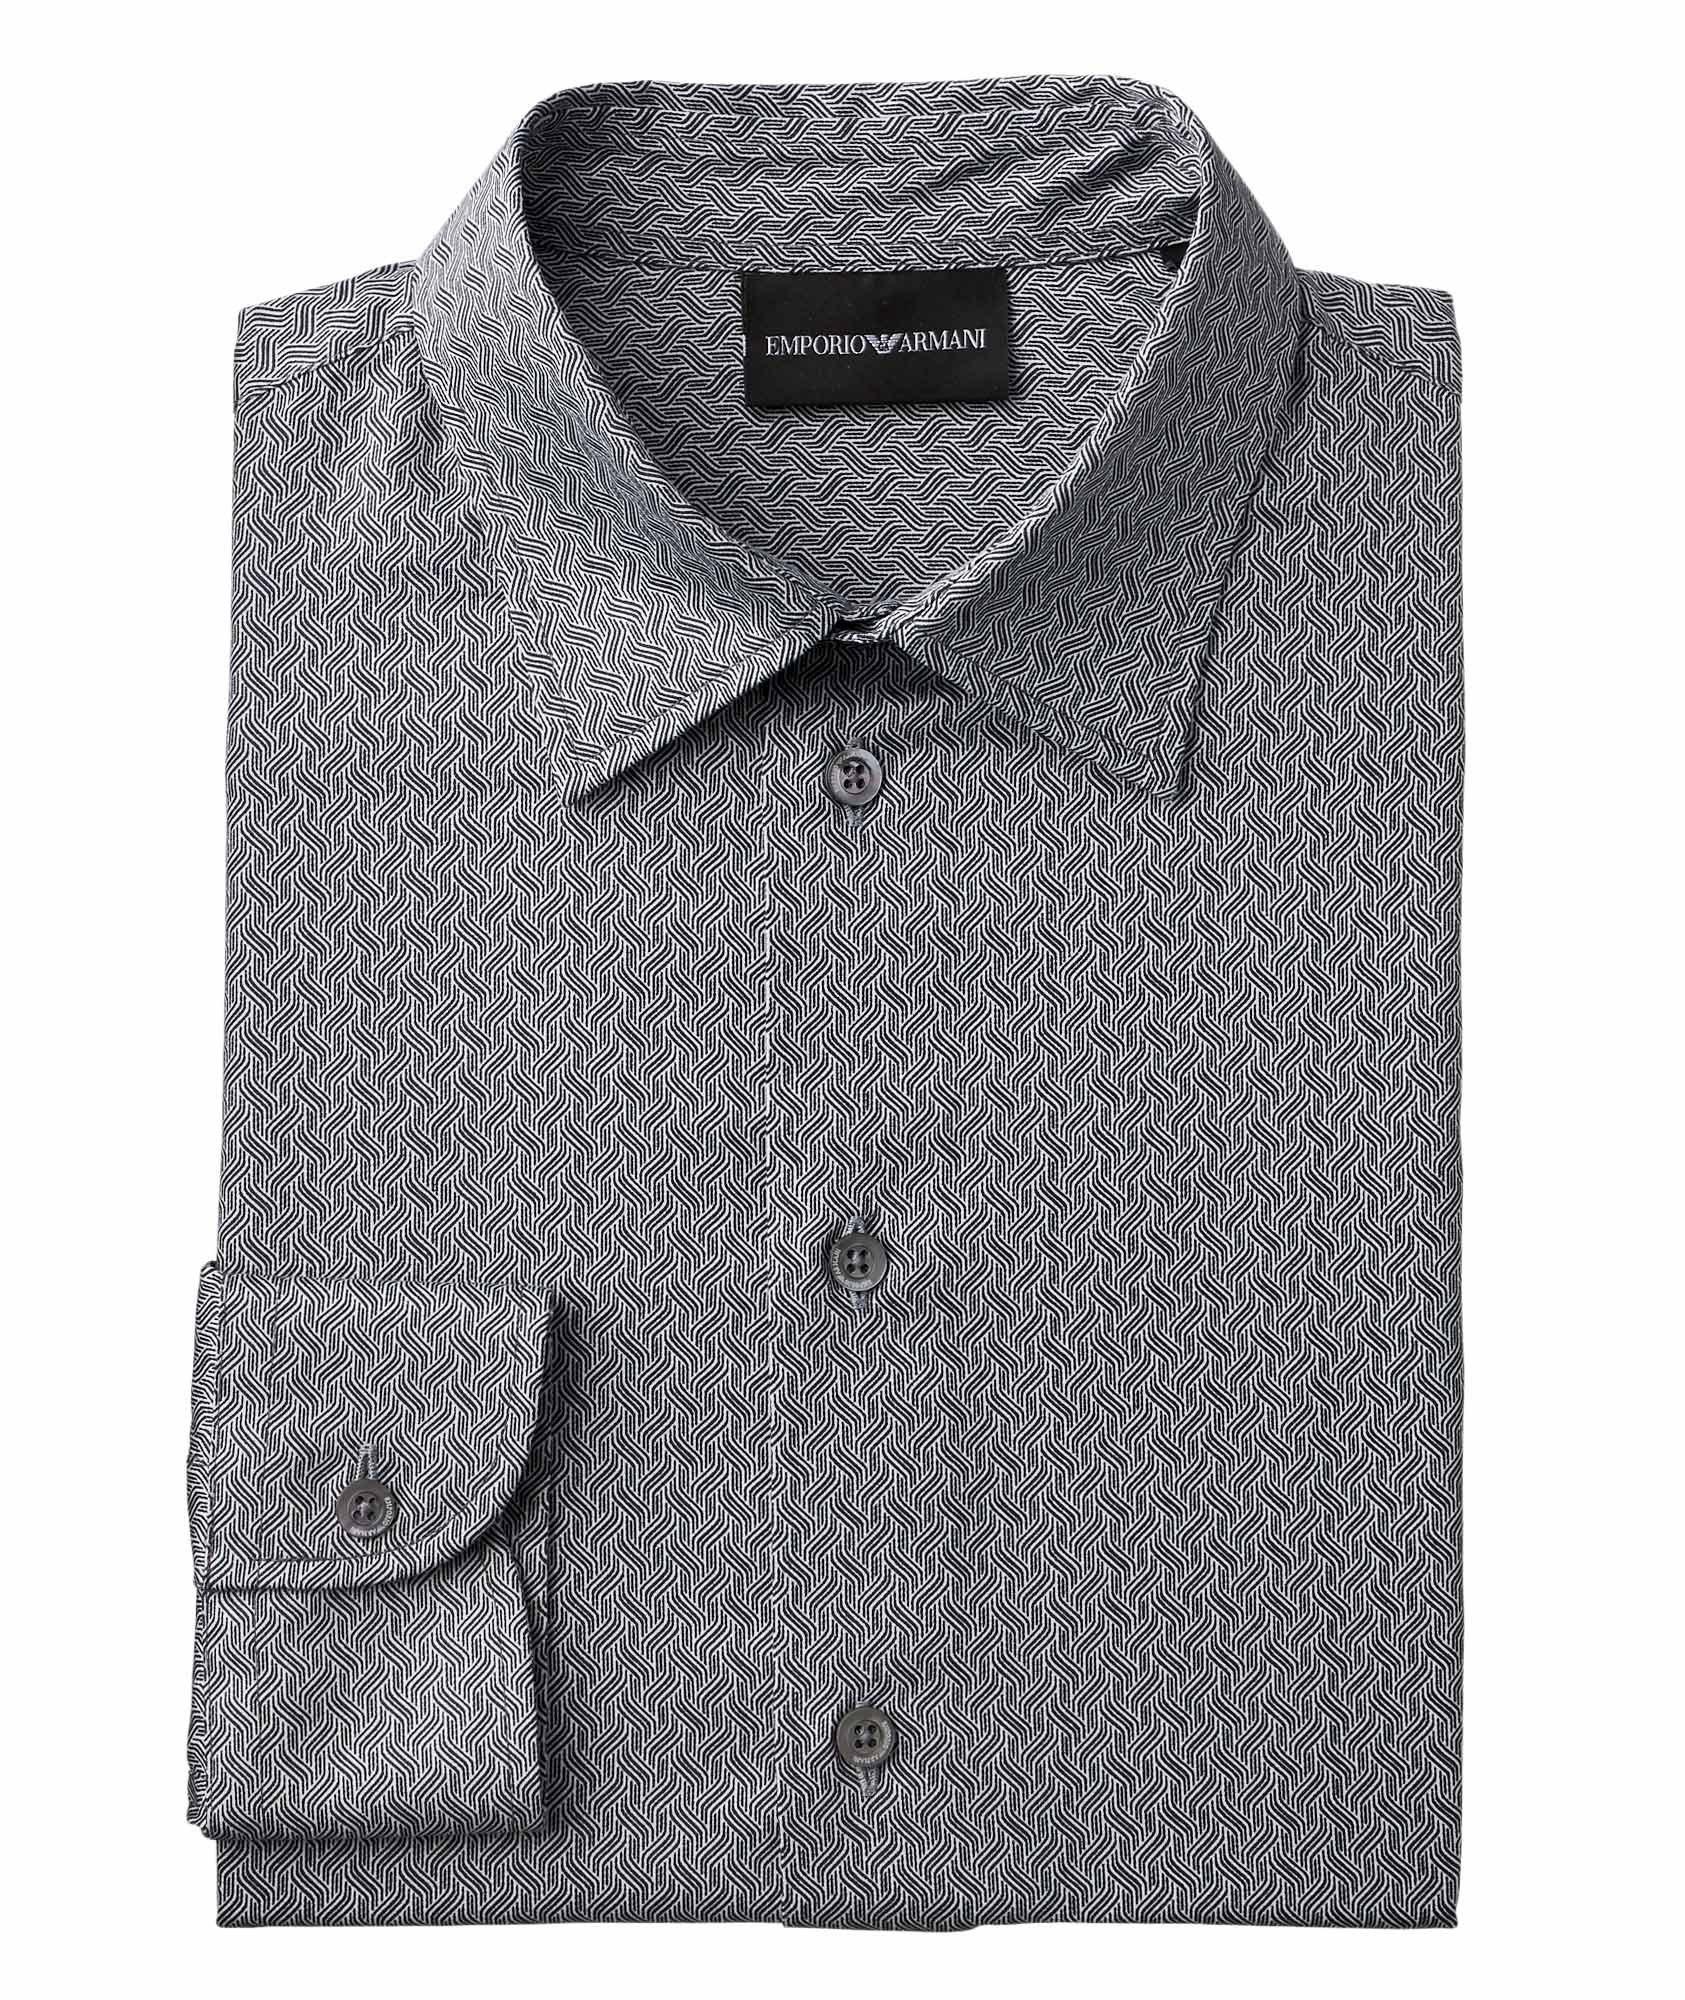 Slim Fit Helix-Printed Cotton Shirt image 0